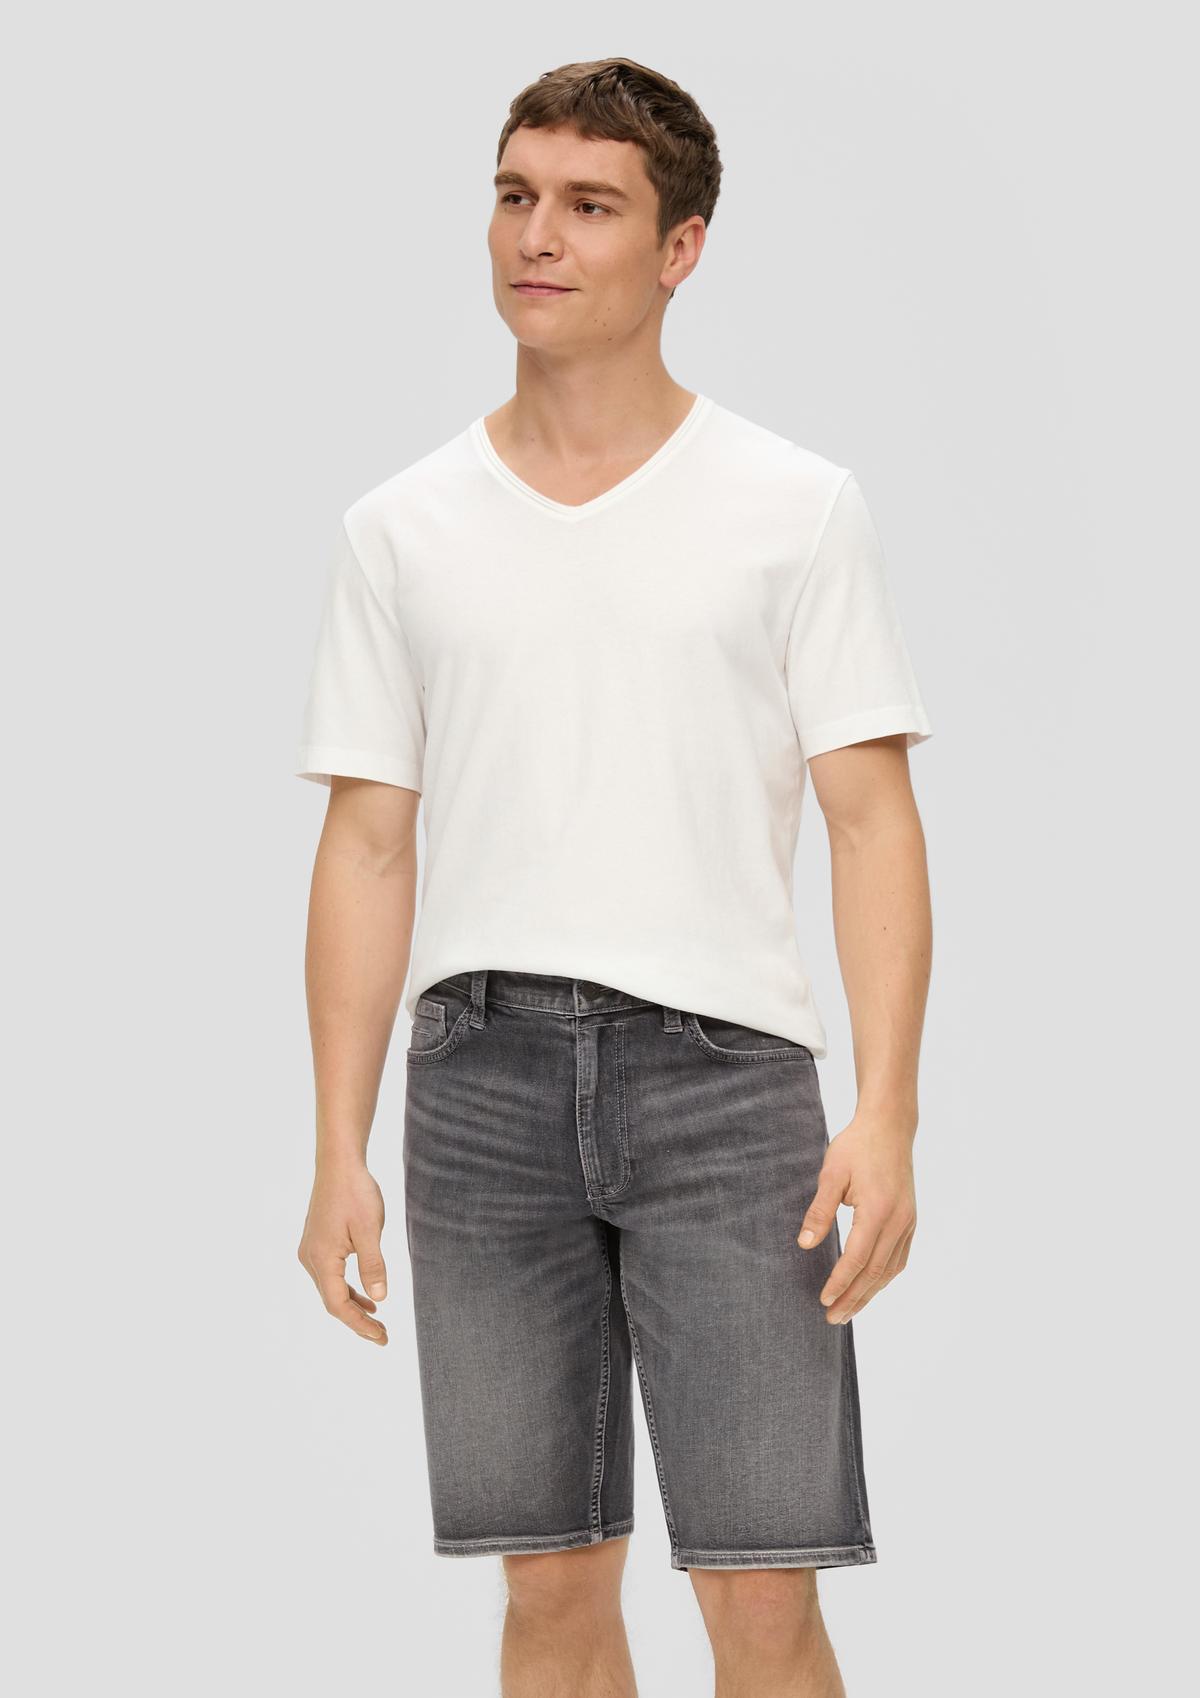 Jeans-short / regular fit / mid rise / slim leg